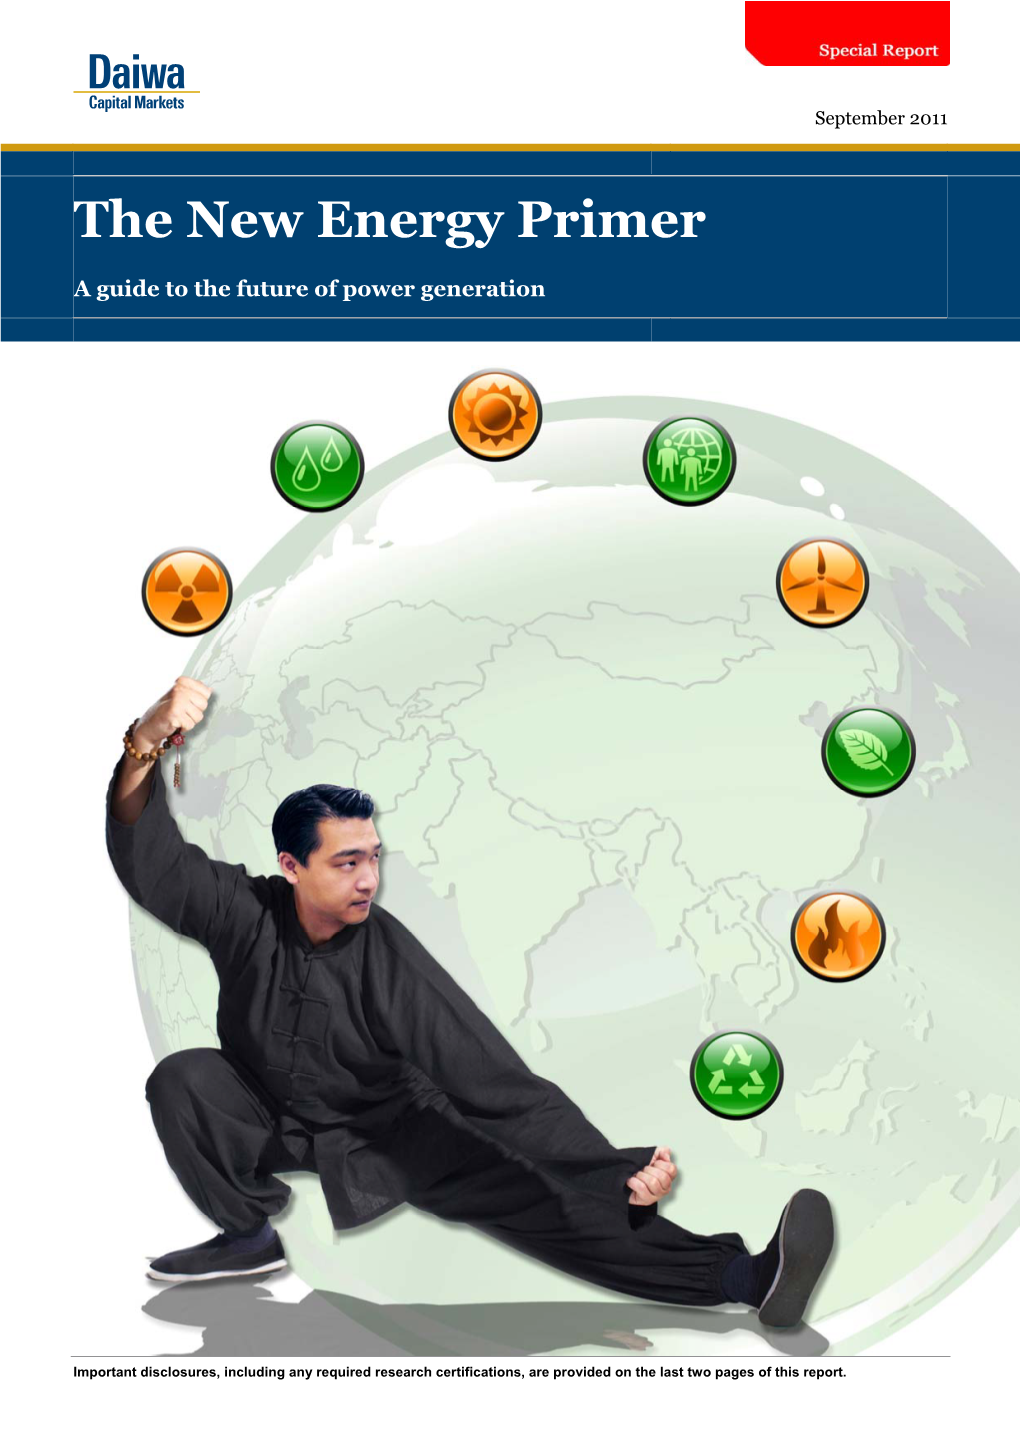 The New Energy Primer